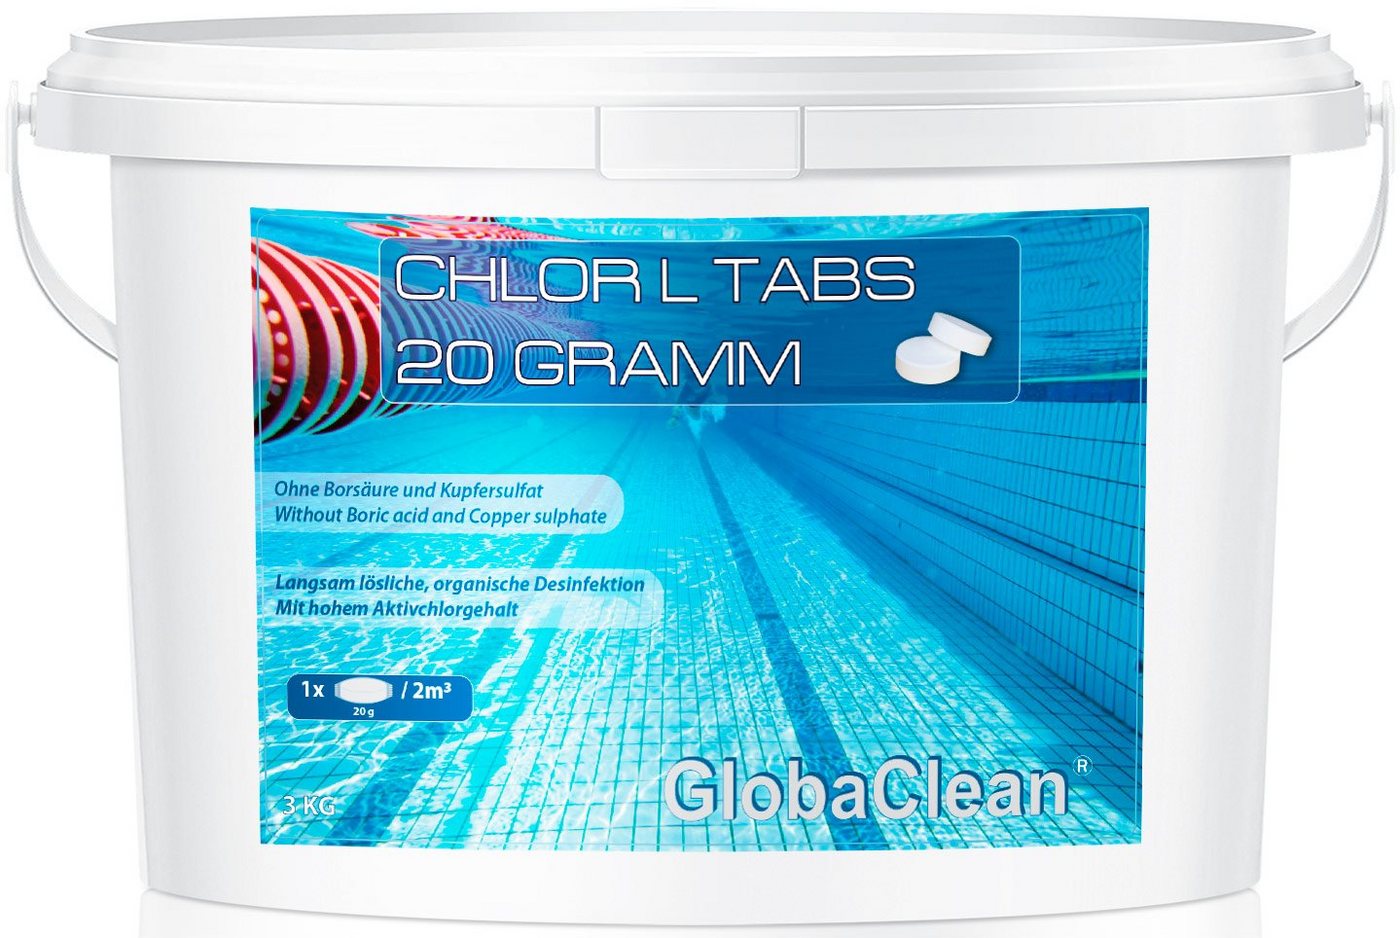 GlobaClean Chlortabletten 3 kg Pool Chlor L Tabs 20g von GlobaClean